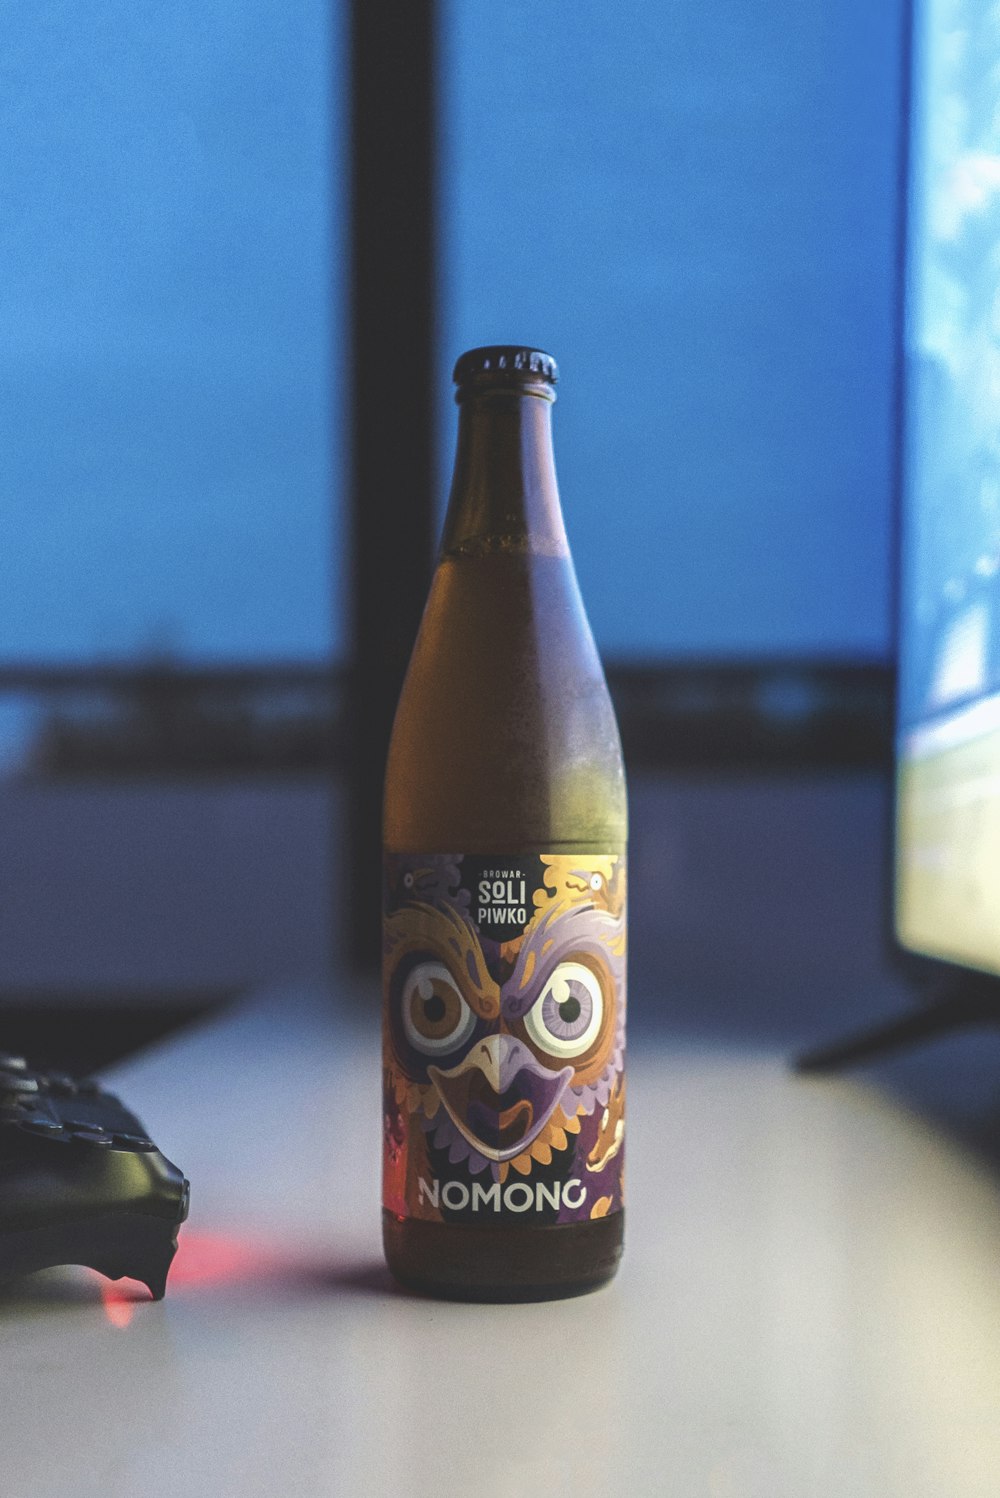 tilt-shift lens photography of Nomono beer bottle in-front of a flat screen TV